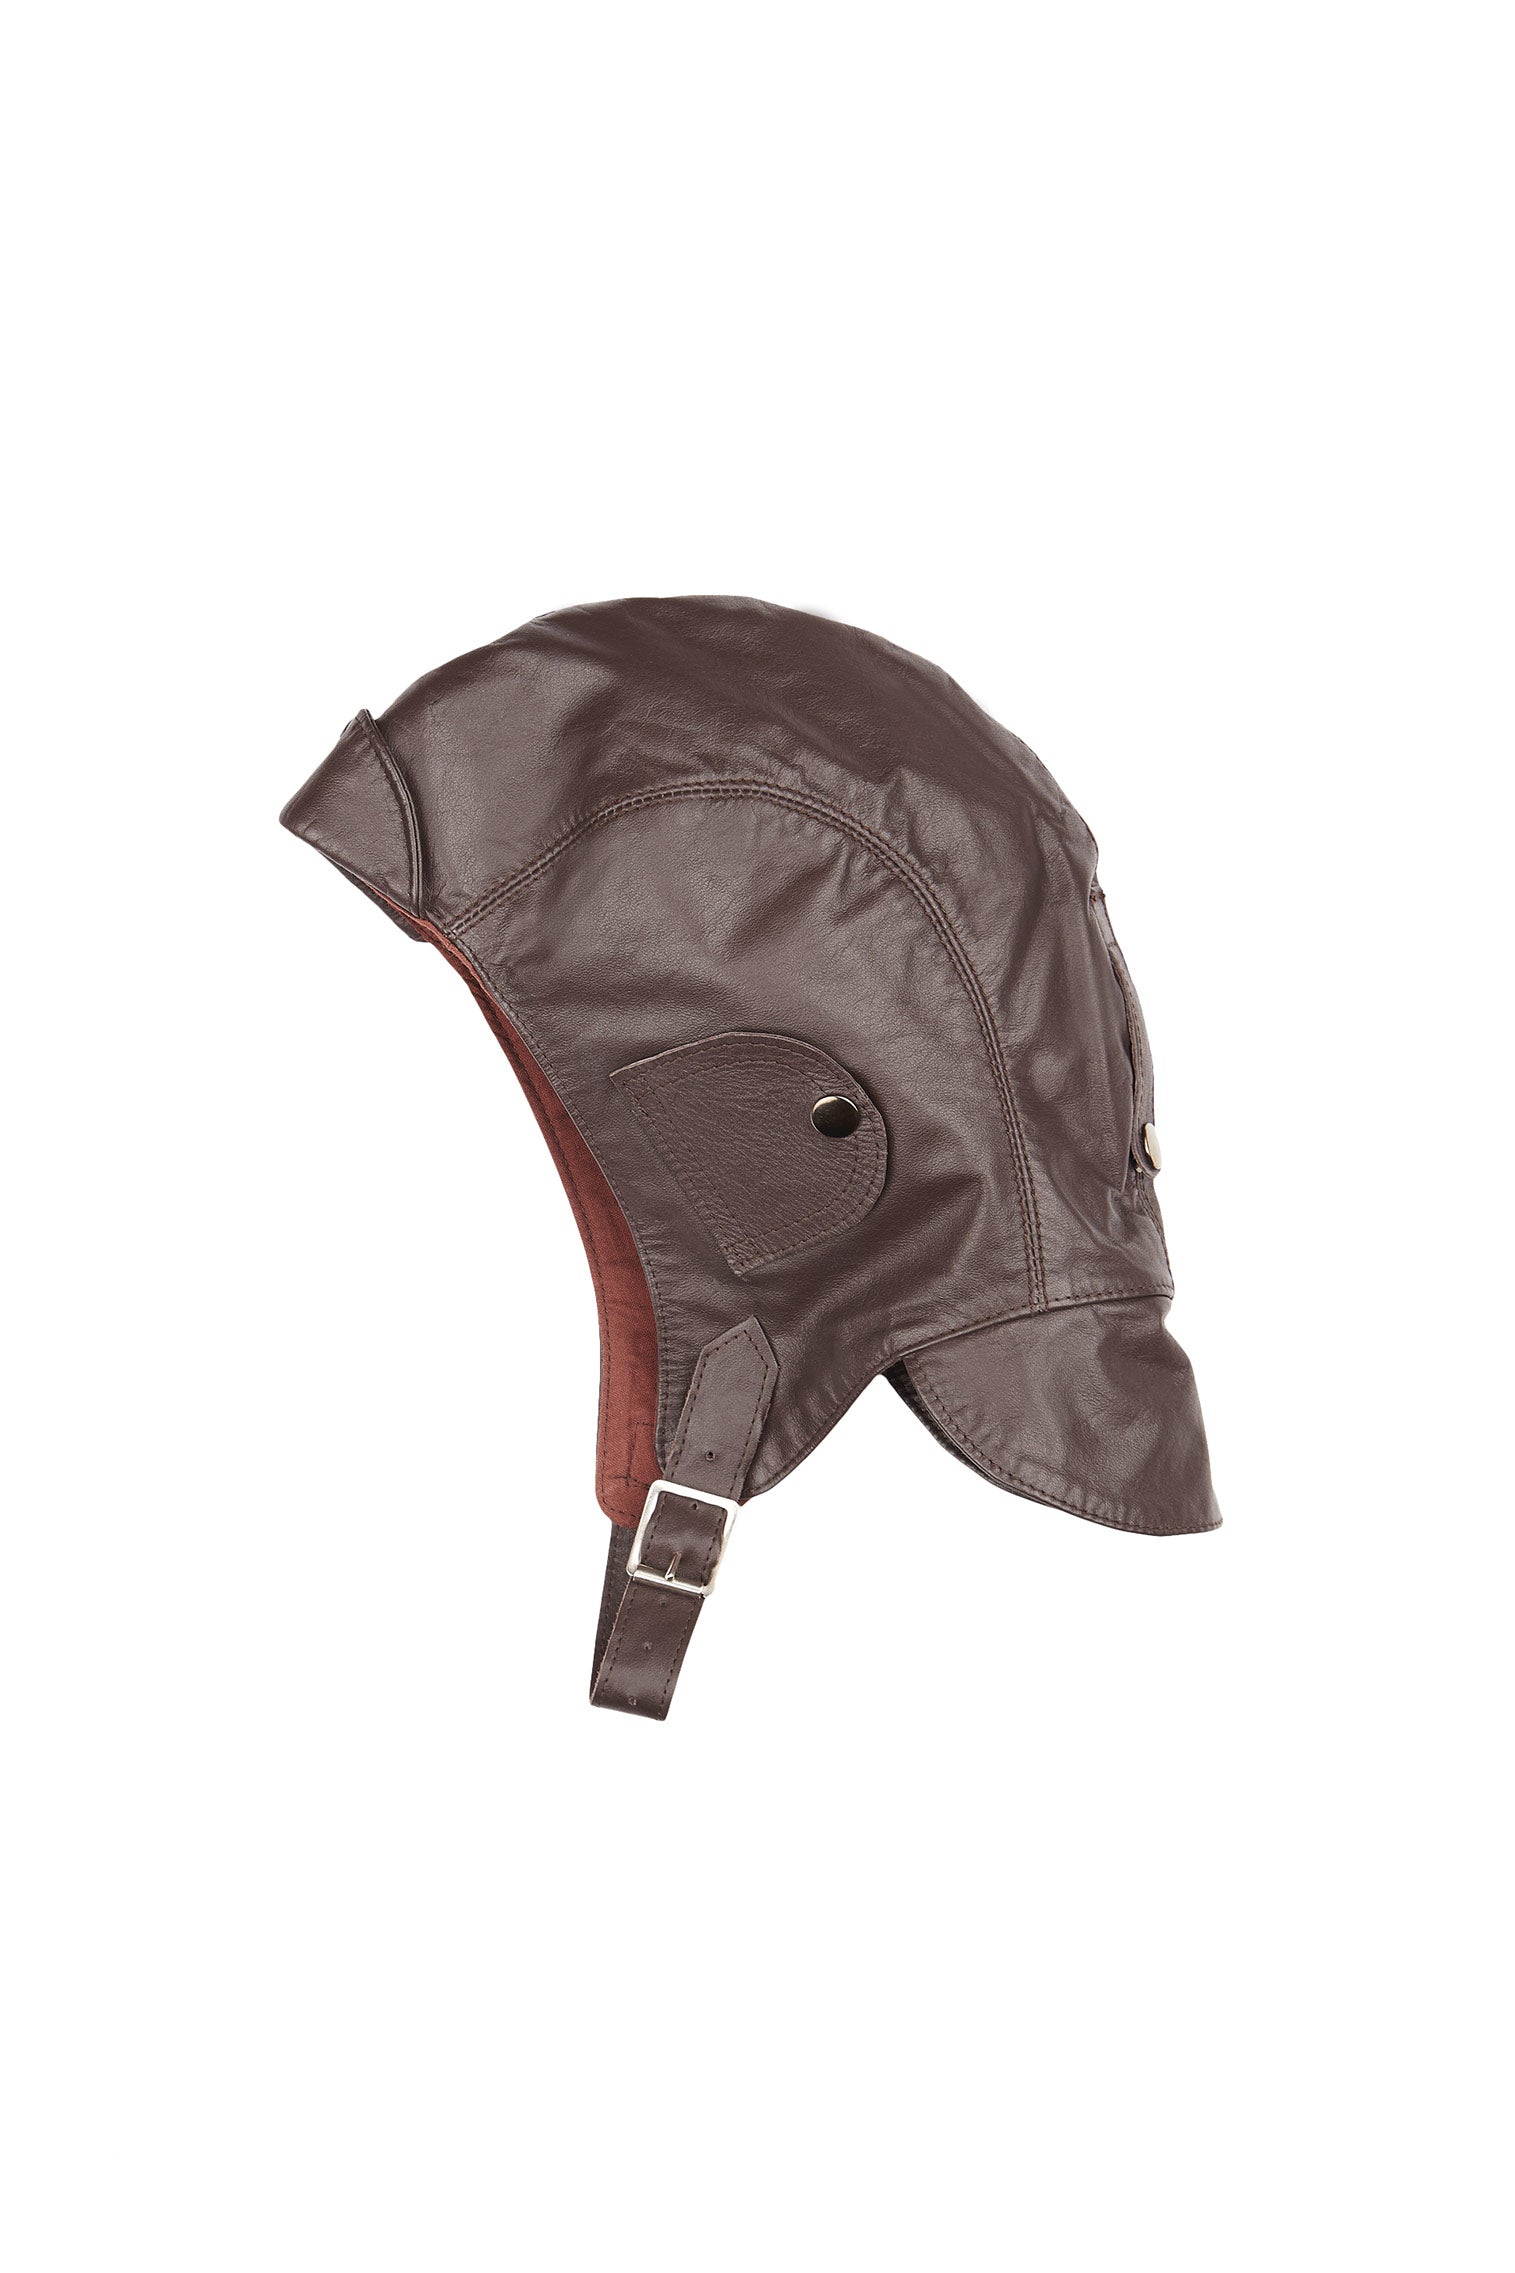 Aviator Helmet - Hat Accessories - Lock & Co. Hatters London UK